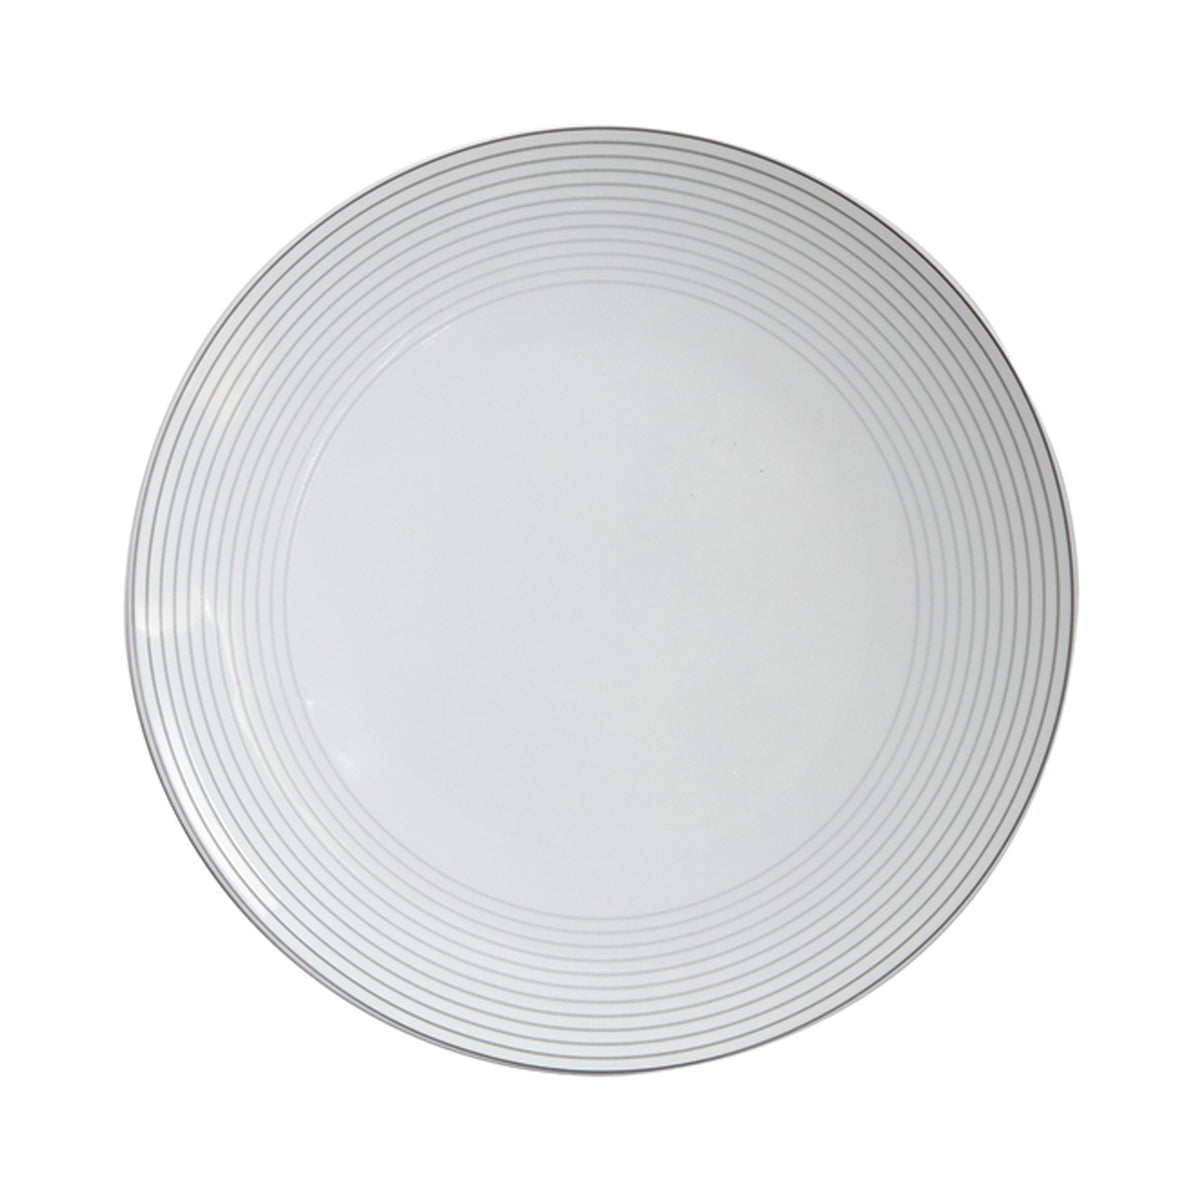 TAC 02 Skin Silhouette Dinner Plate (D)